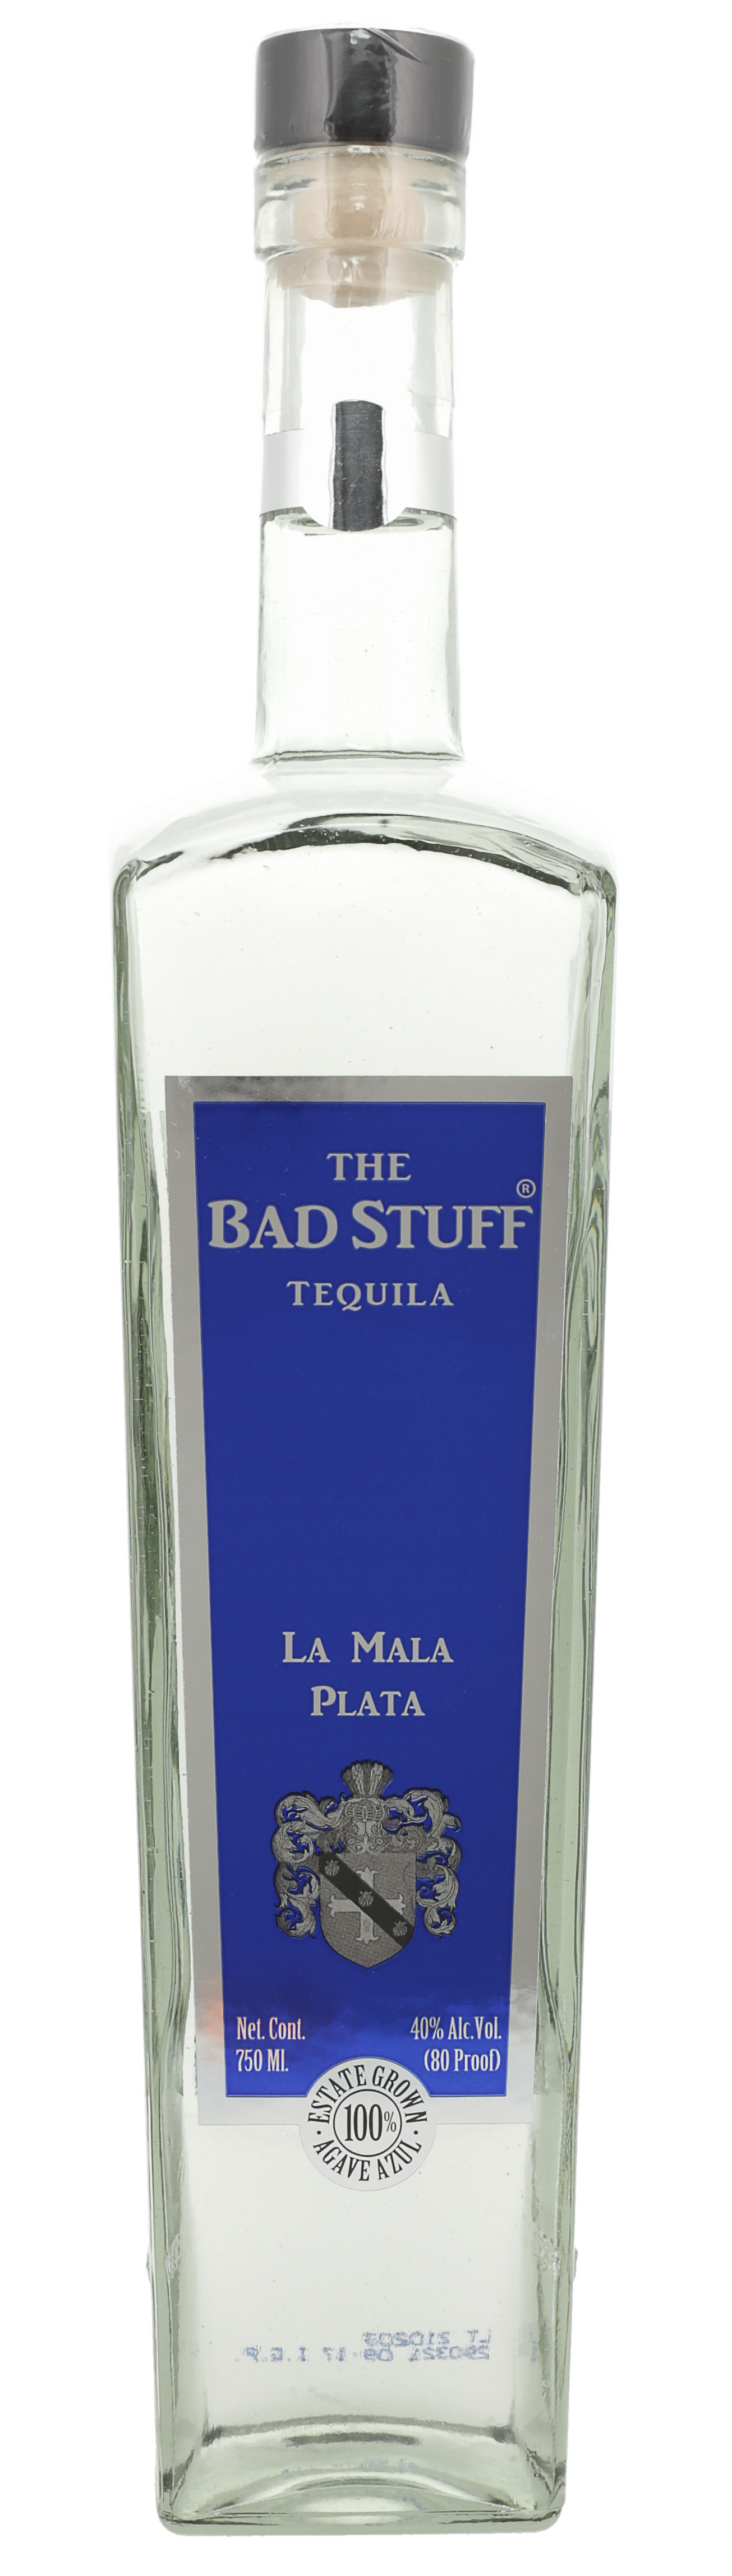 The Bad Stuff La Mala Plata Tequila